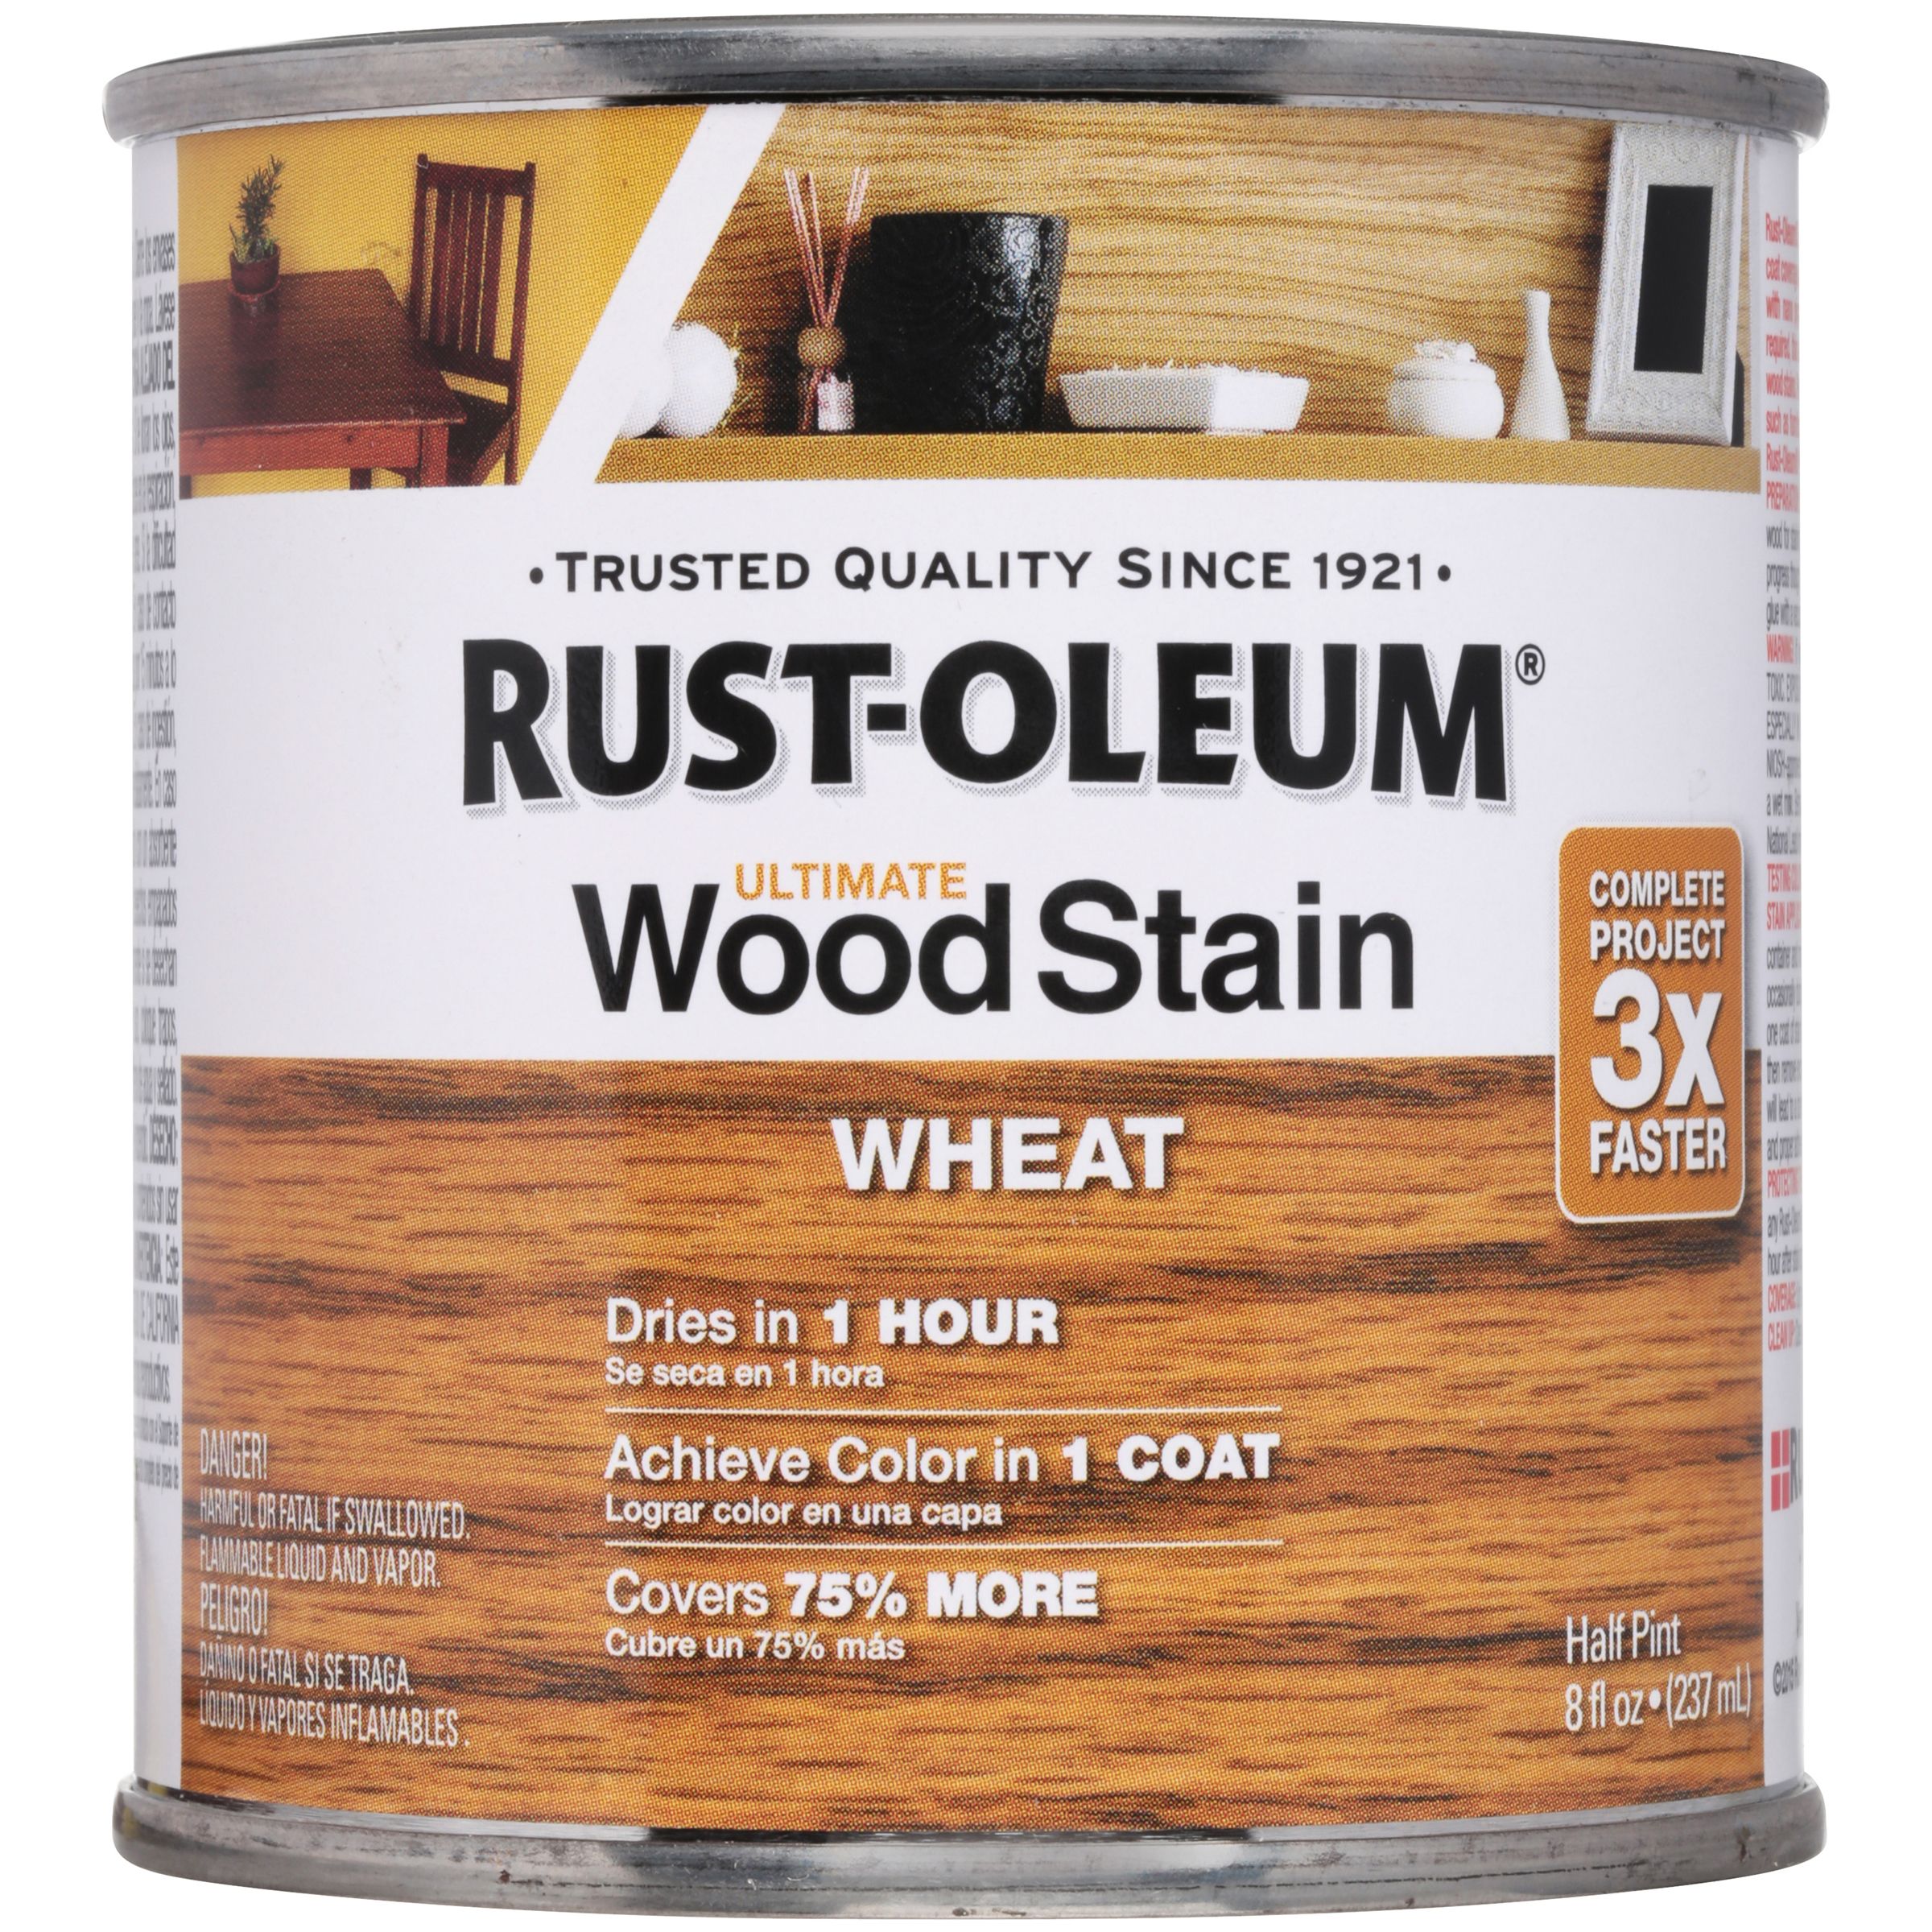 Rust-Oleum Wheat Wood Stain, 8 fl oz - image 4 of 4